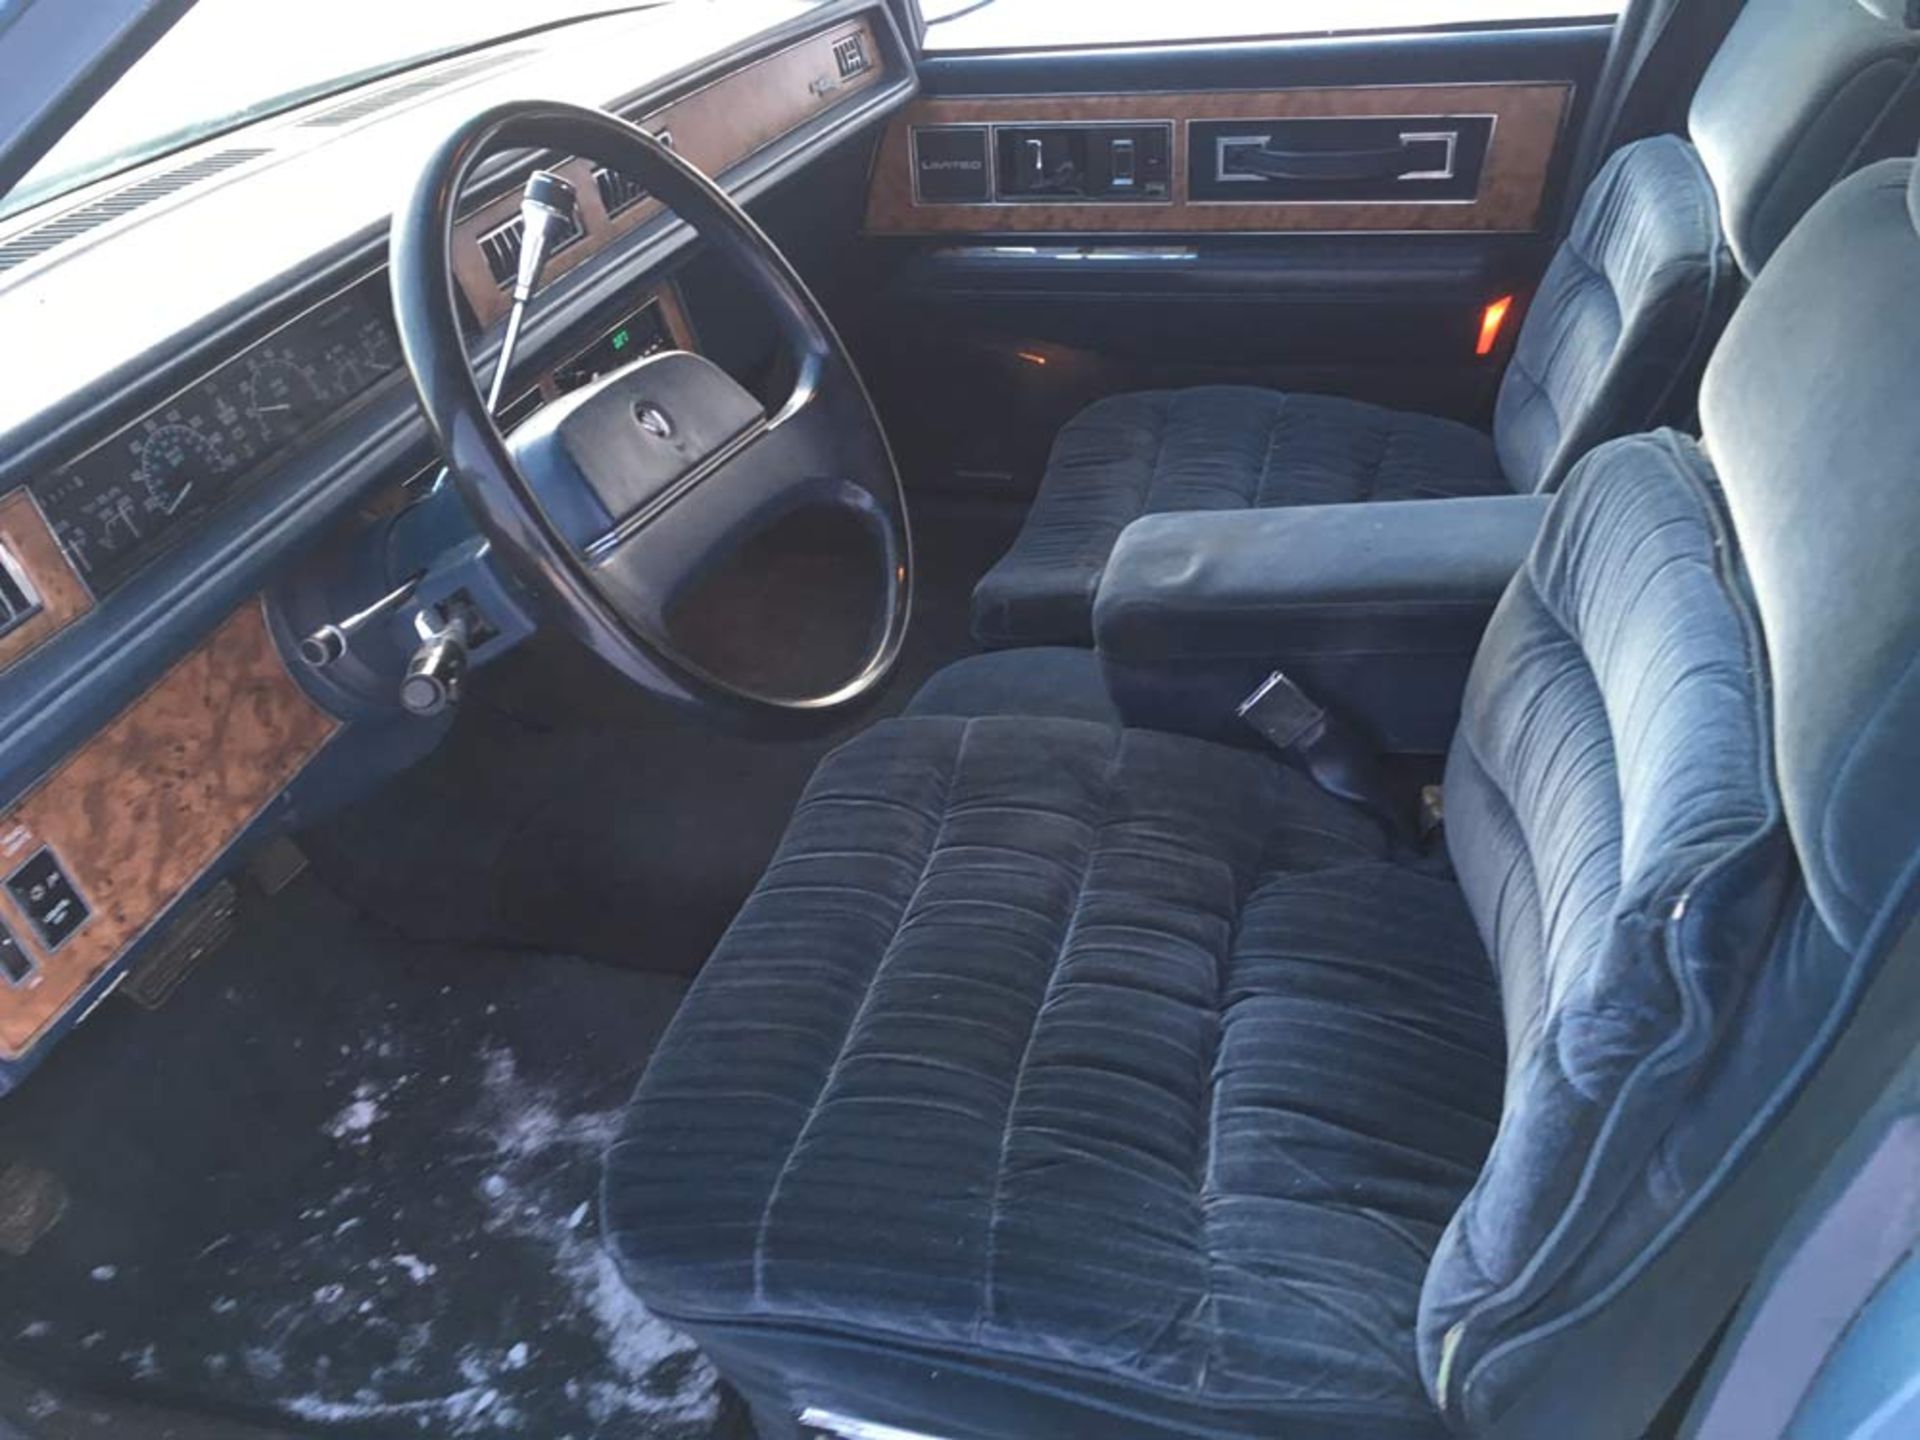 1989 Buick LeSabre 4 Door Sedan - Image 5 of 6